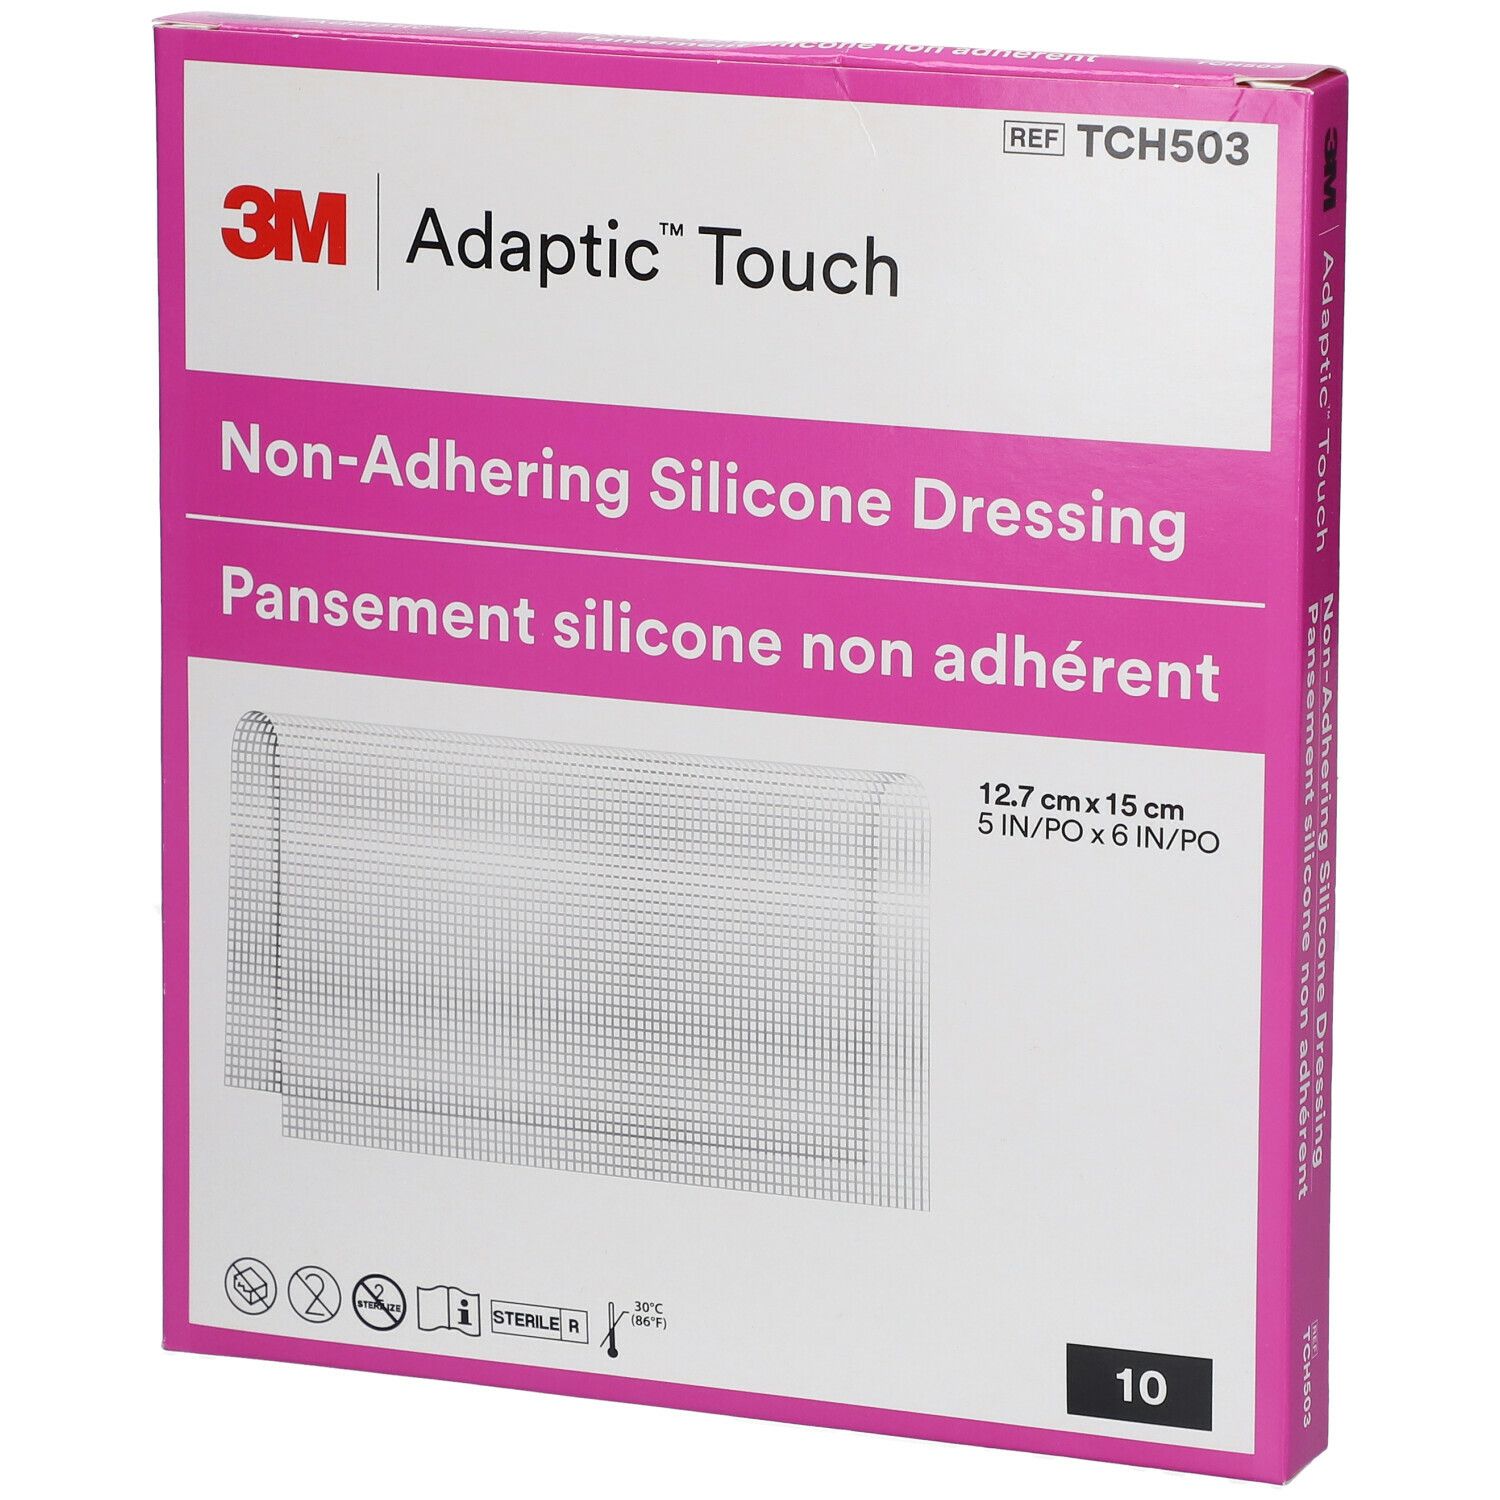 3M™ Adaptic™ Touch 12,7 x 15 cm